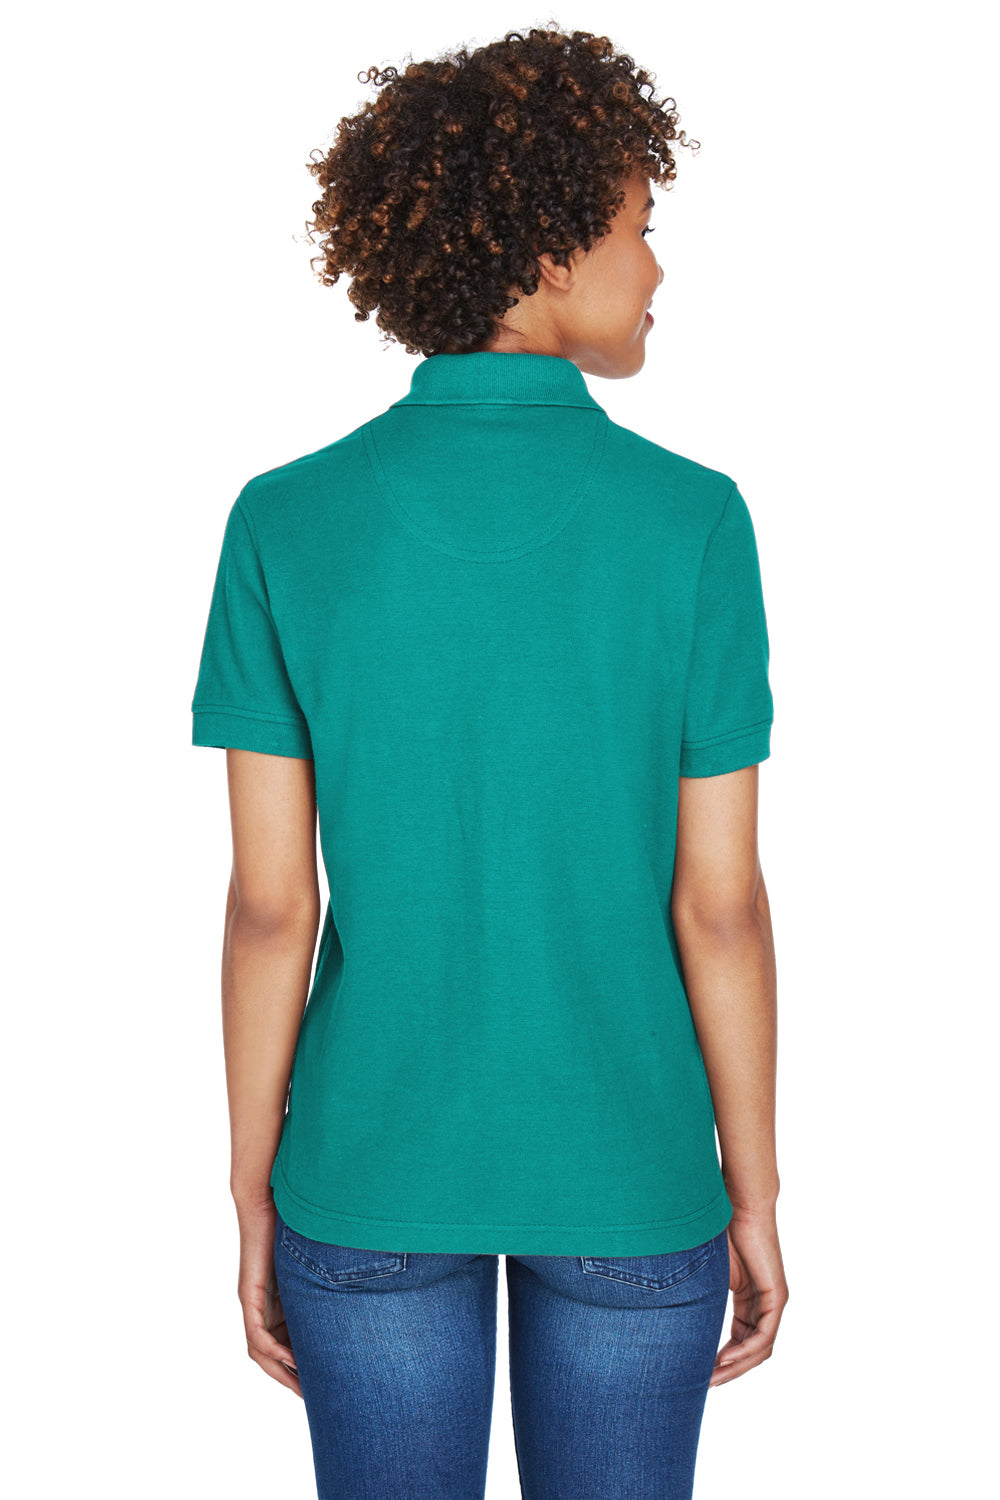 UltraClub 8541 Womens Whisper Short Sleeve Polo Shirt Jade Green Back